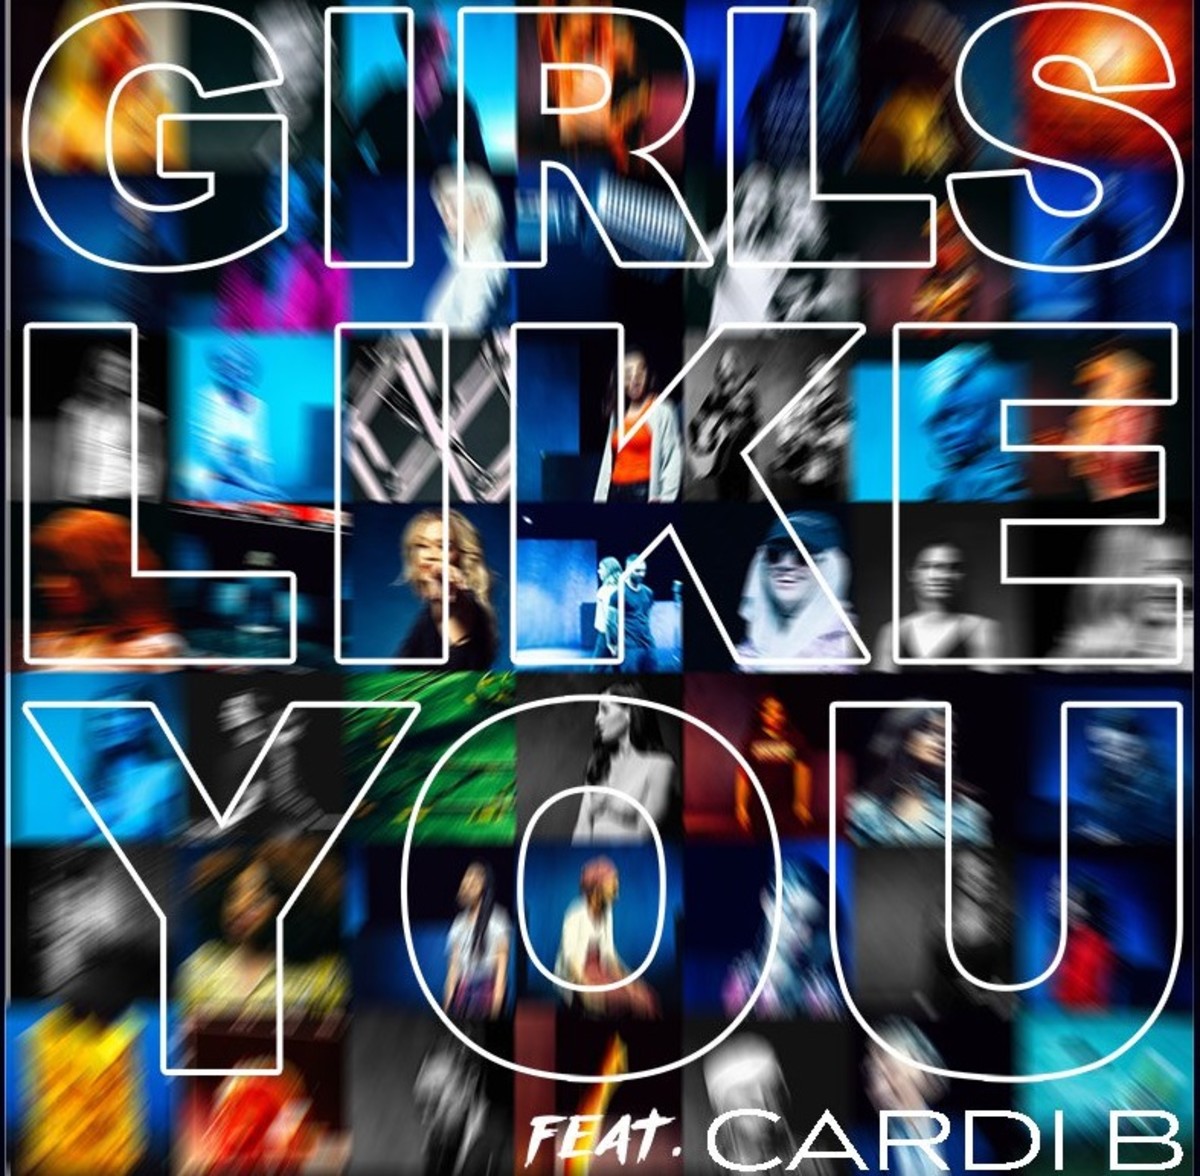 "Girls Like You" by Maroon 5 ft. Cardi B